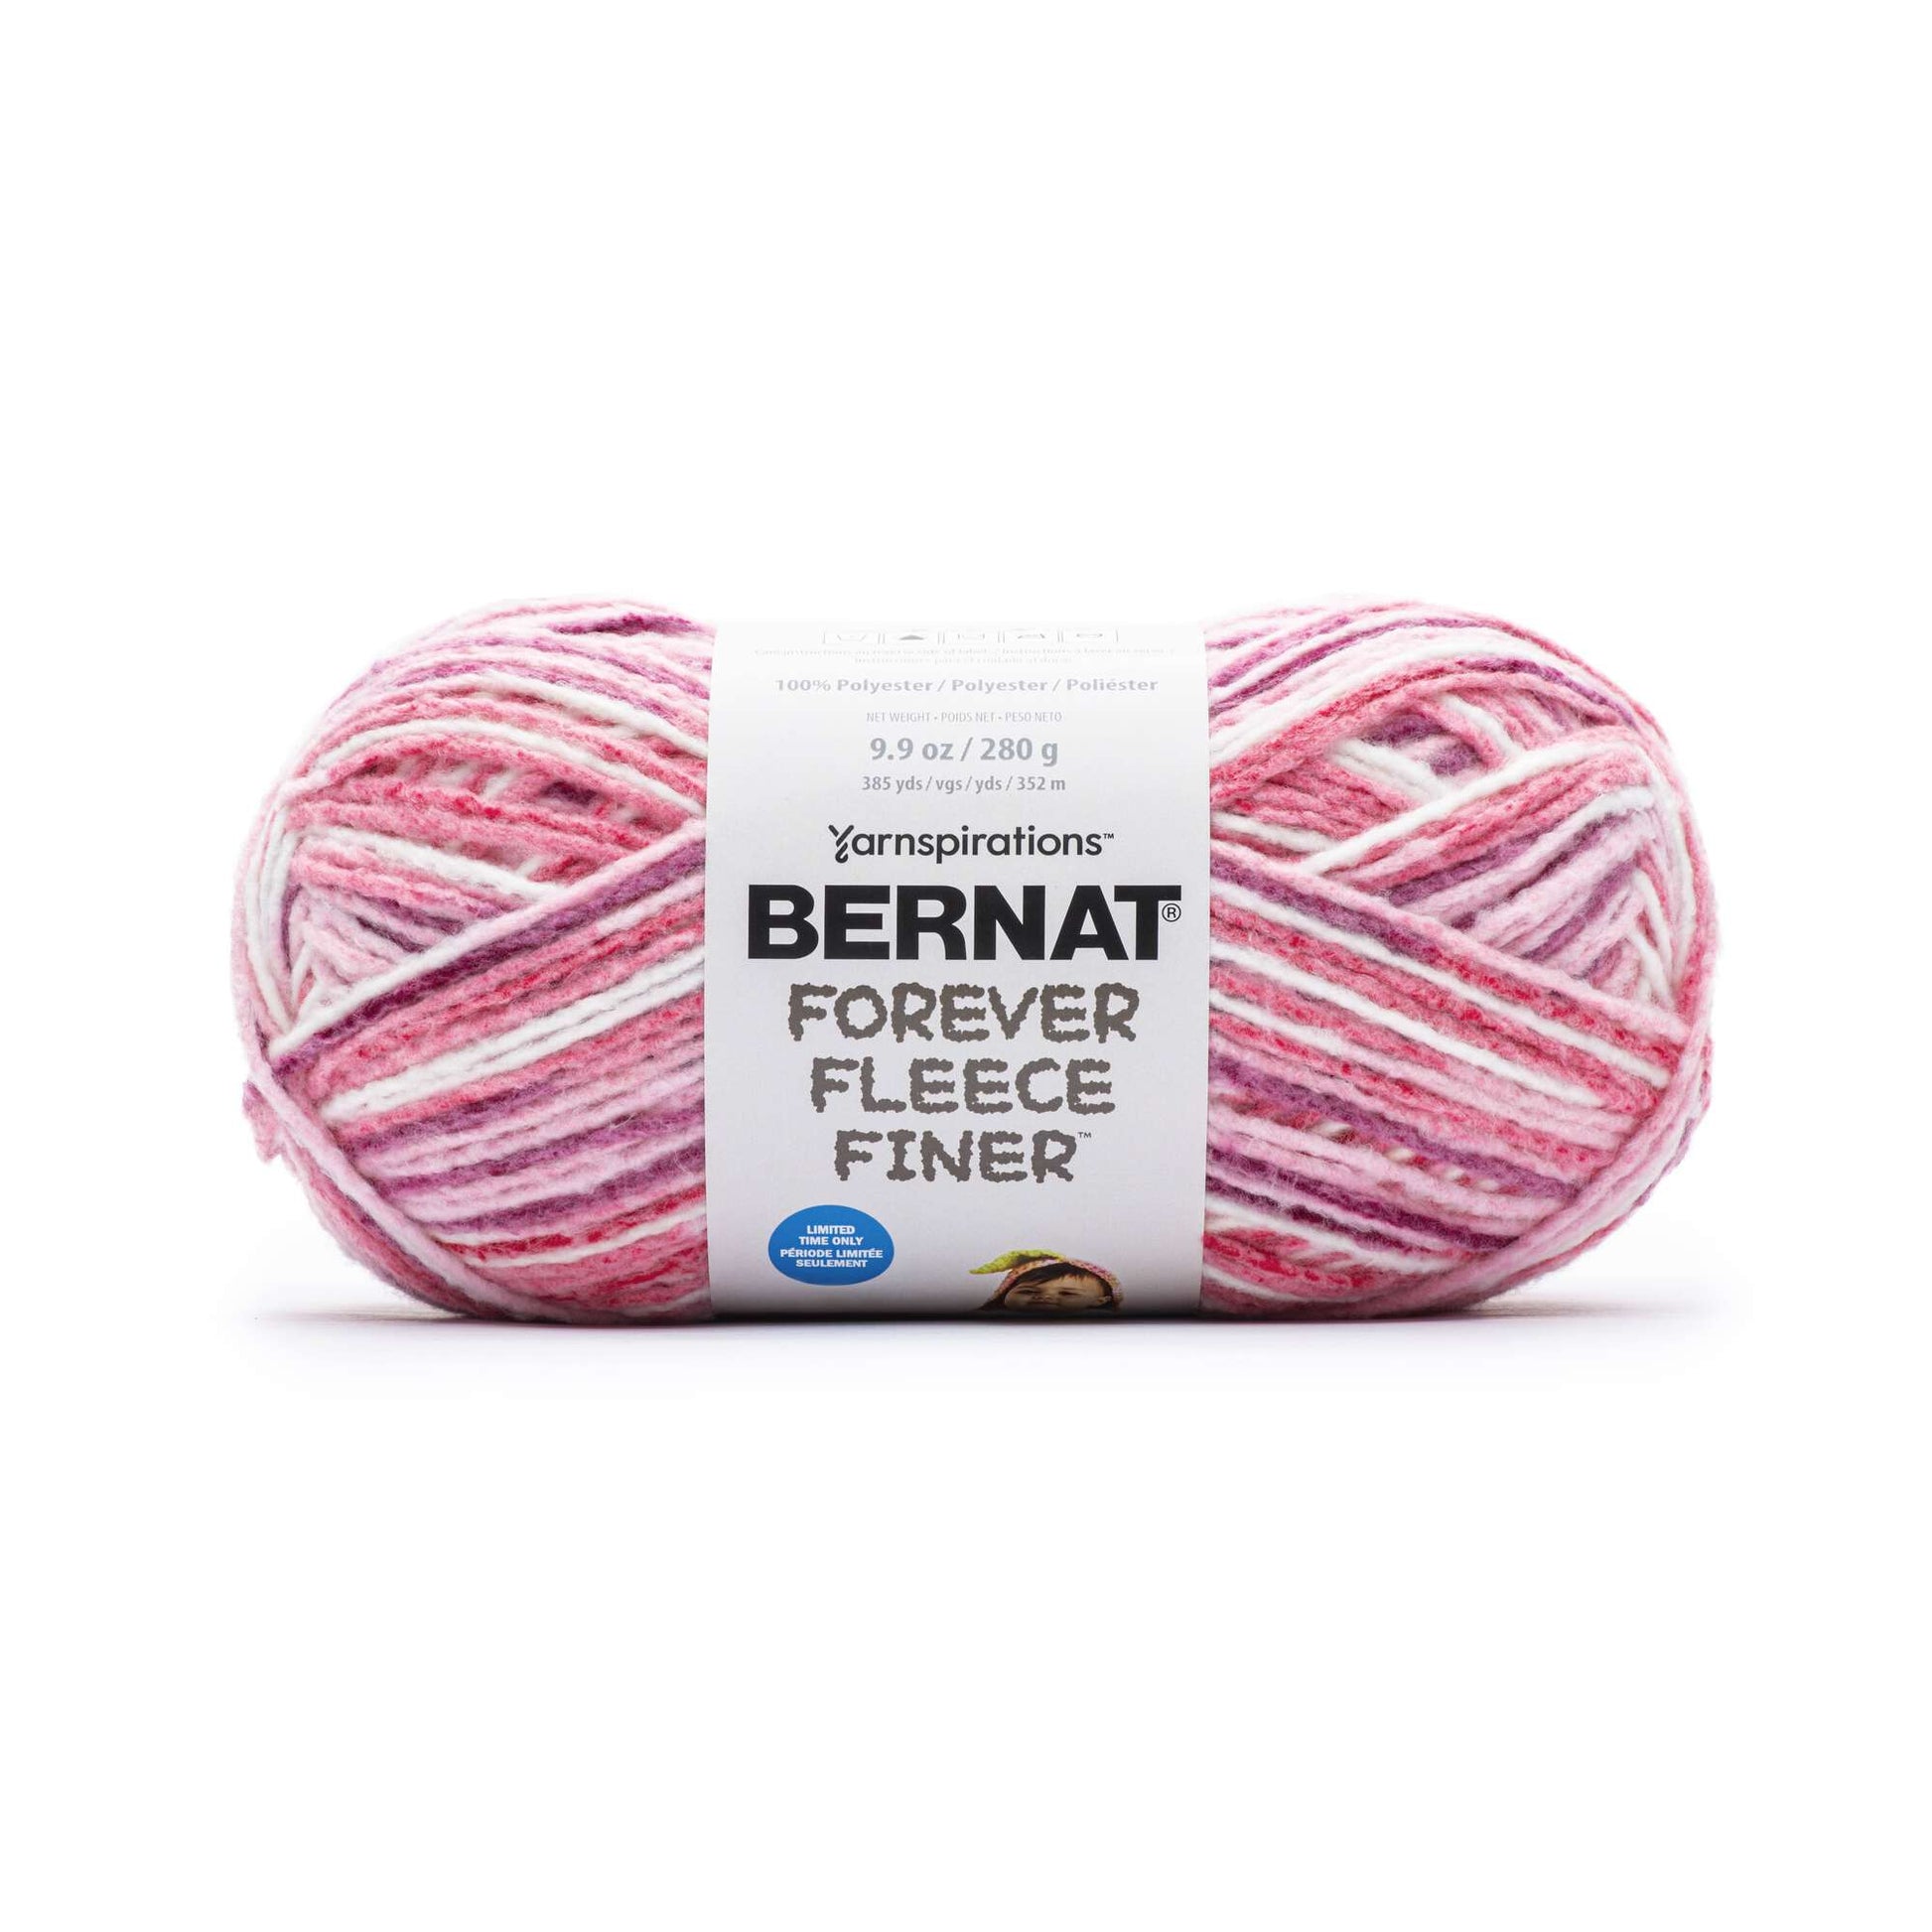 Bernat Forever Fleece Finer Yarn - Discontinued Shades Raspberry Ripple